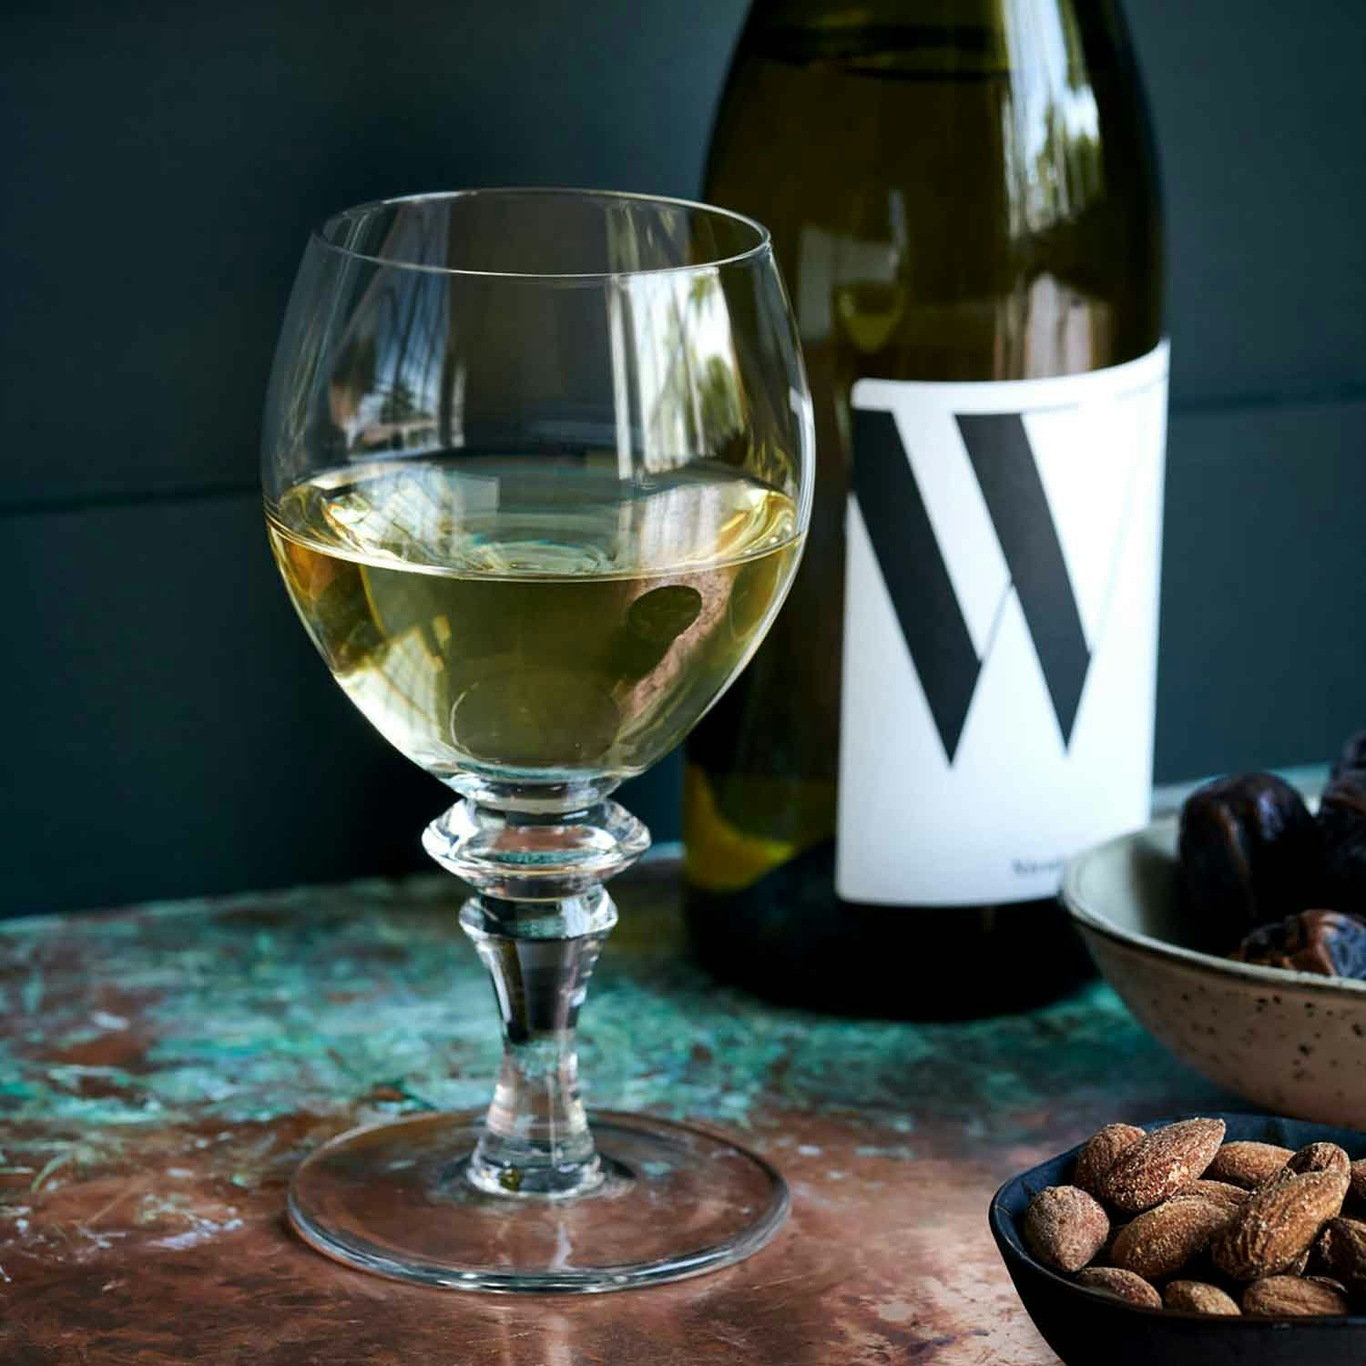 https://royaldesign.com/image/2/house-doctor-main-white-wine-glass-30-cl-1?w=800&quality=80